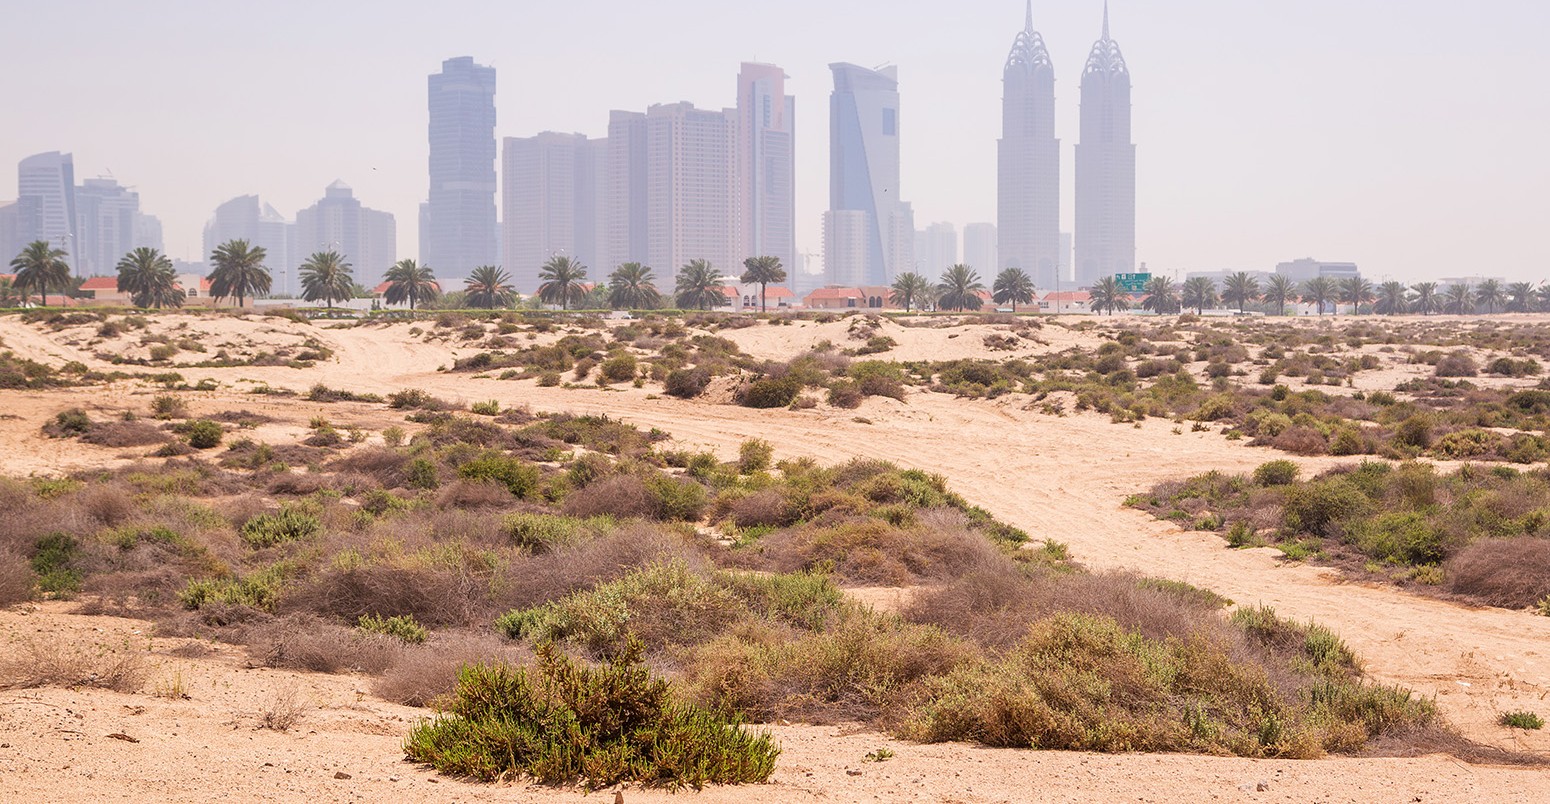 Sandy scenery od Dubai at the Jumeirah Beach, UAE.